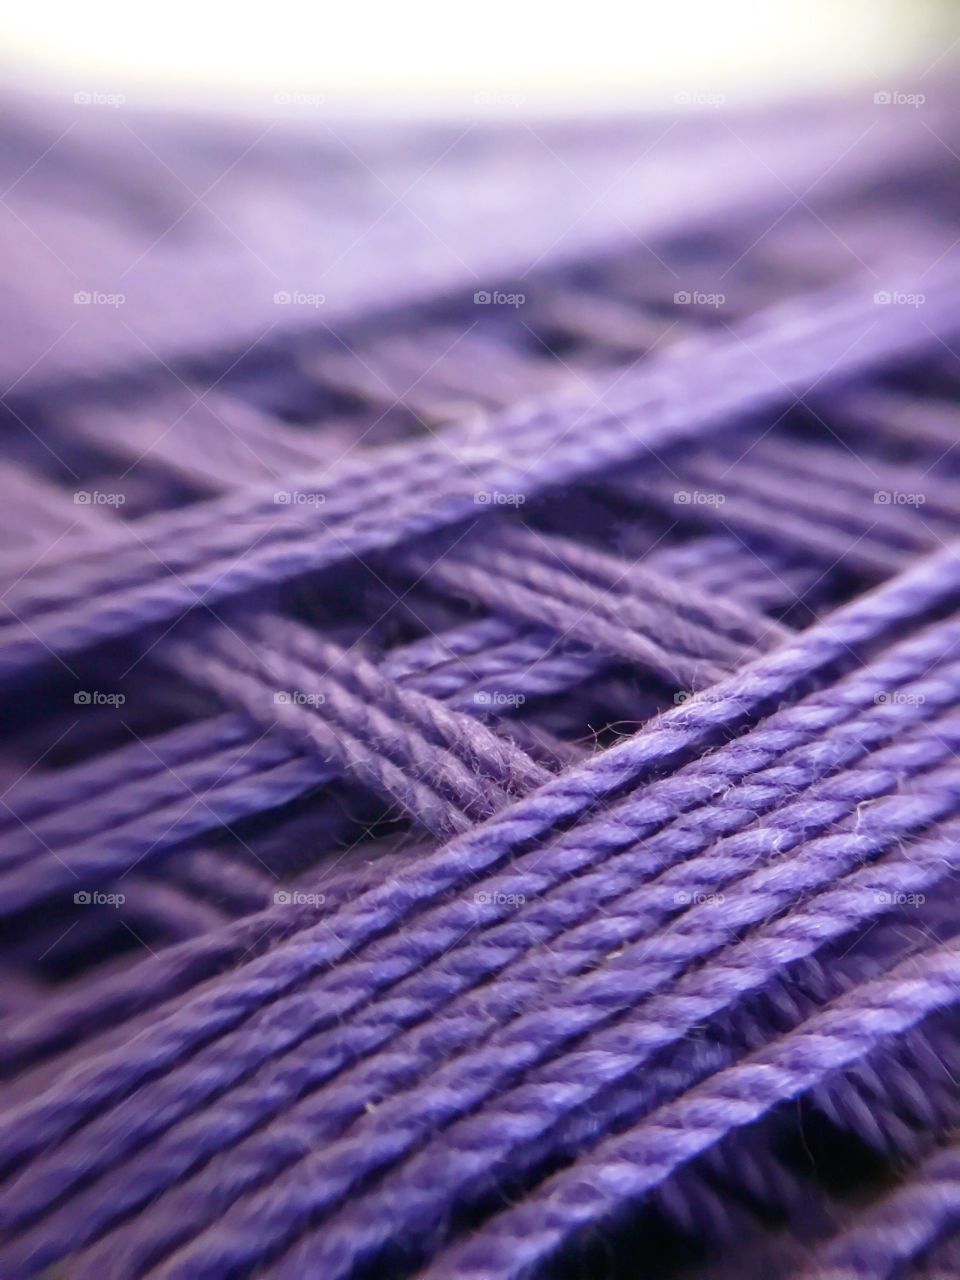 Purple yarn DIY Crafts for the Fall Season